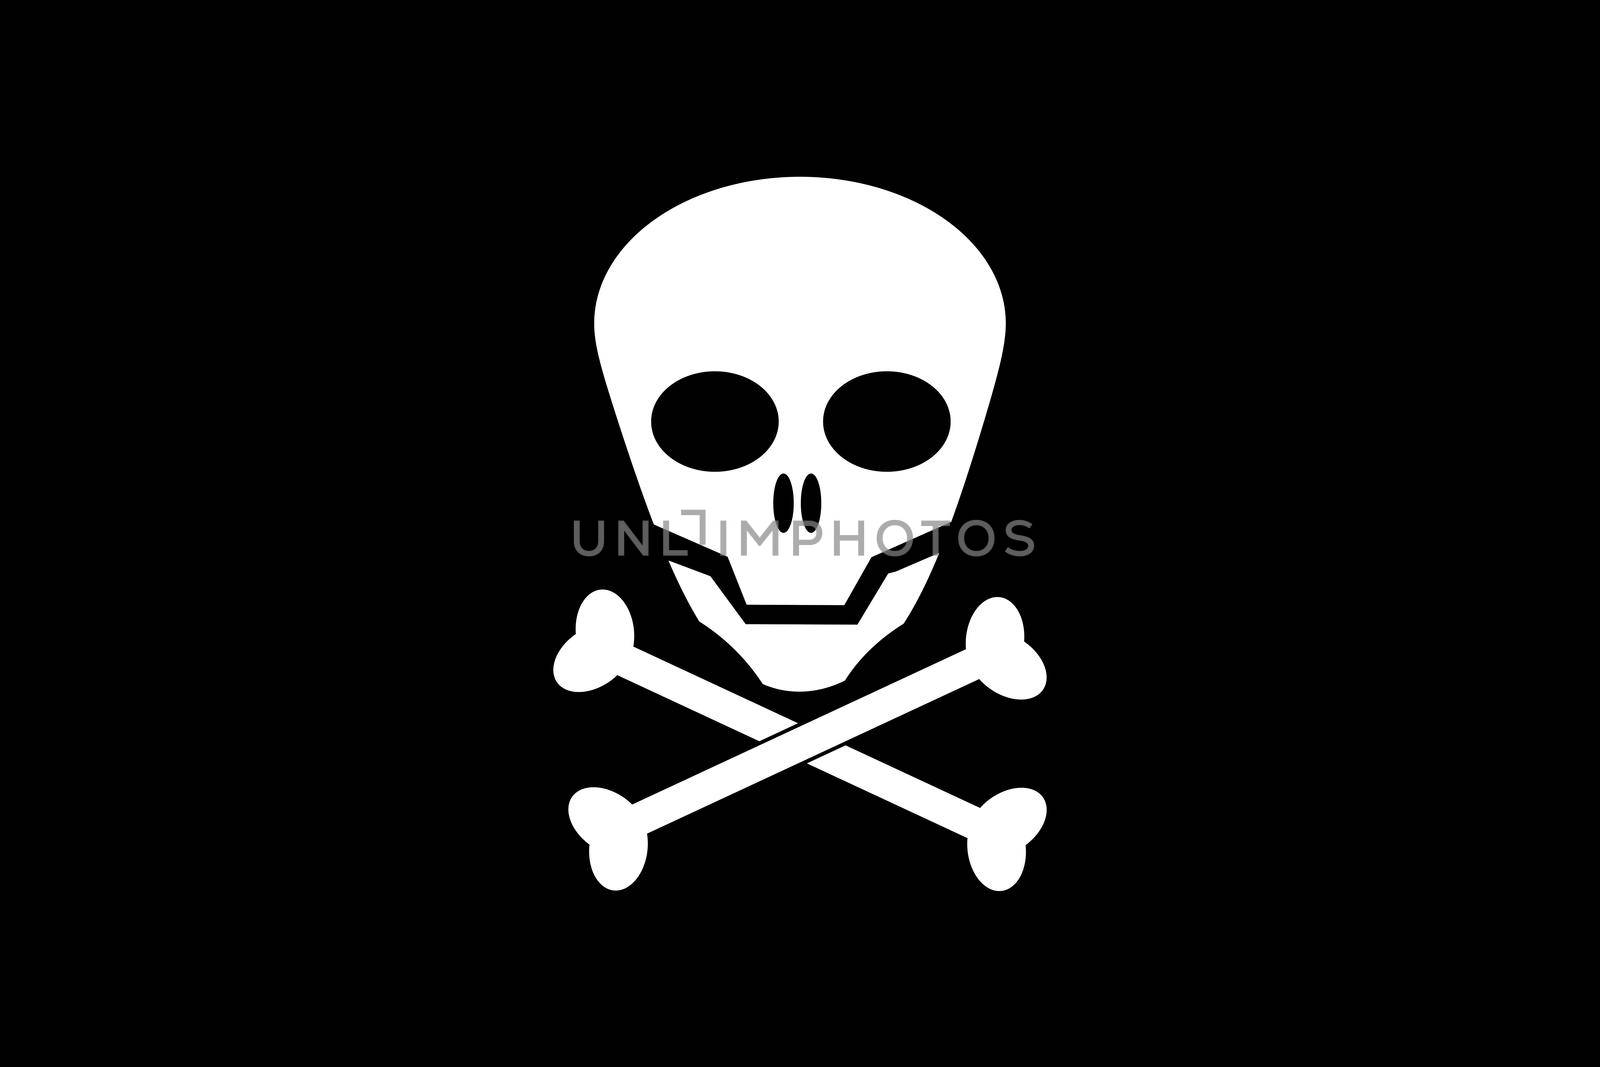 A Jolly Roger skull and cross bones pirate flag